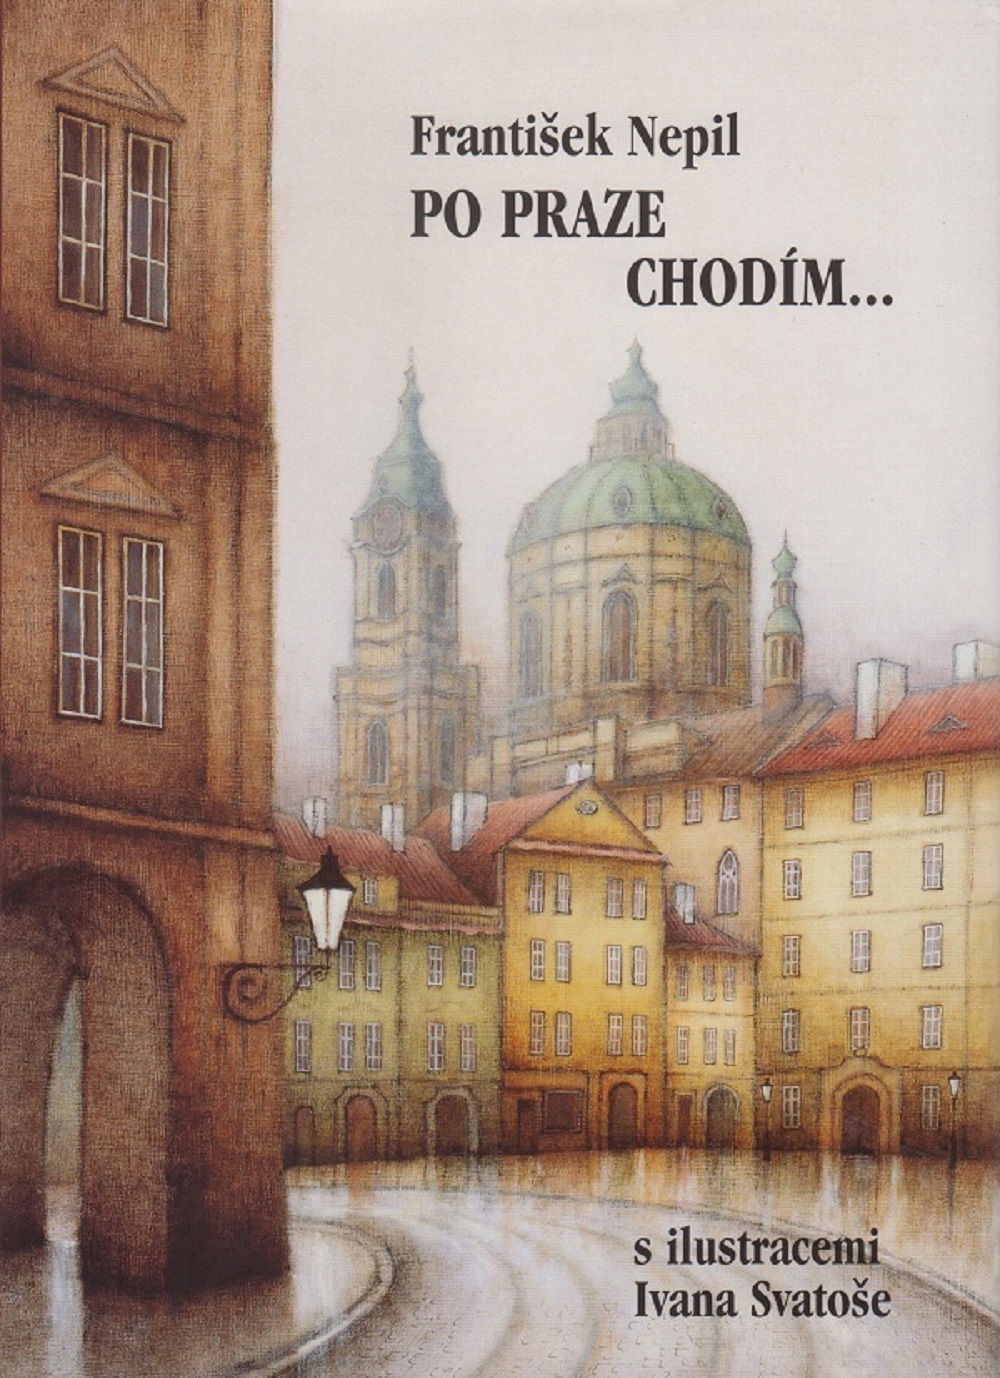 Po Praze Chodim by Frantisek Nepil and Ivan Svatos 